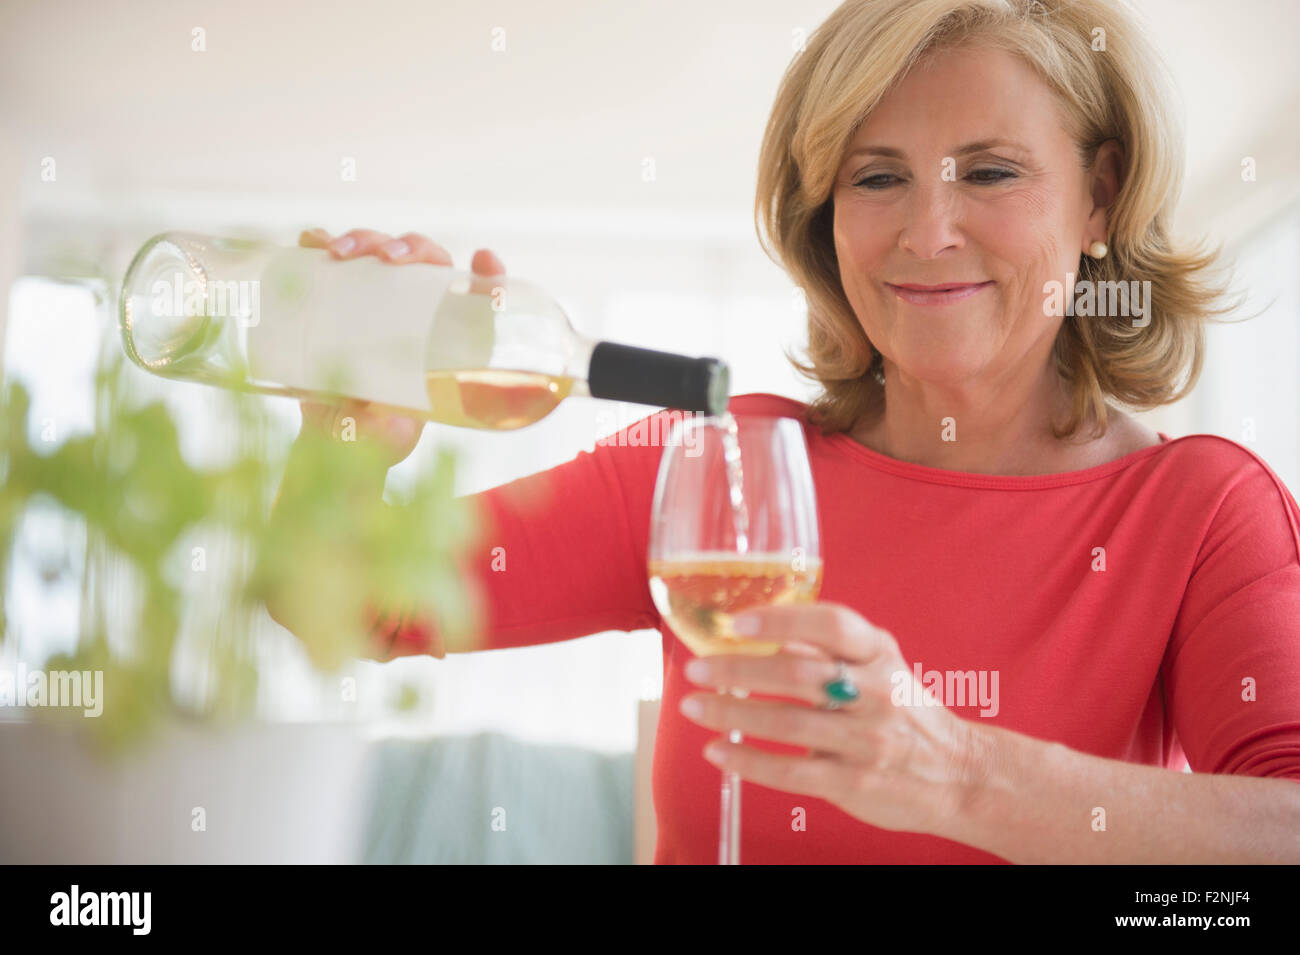 Caucasian woman pouring glass of white wine Stock Photo